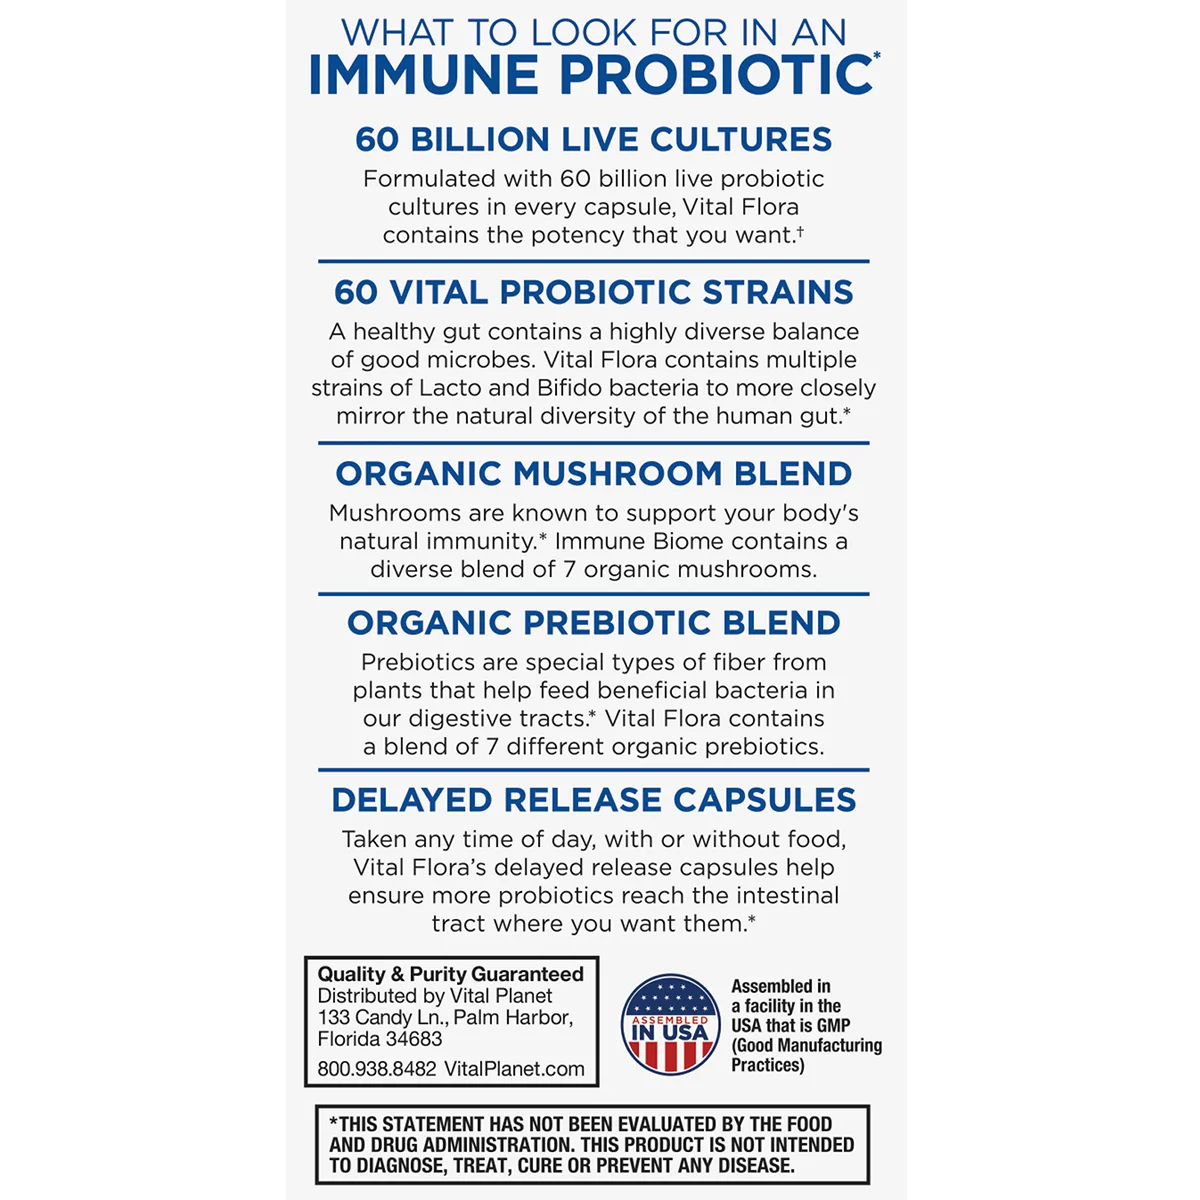 Vital Flora Immune Biome Probiotic (Shelf Stable)